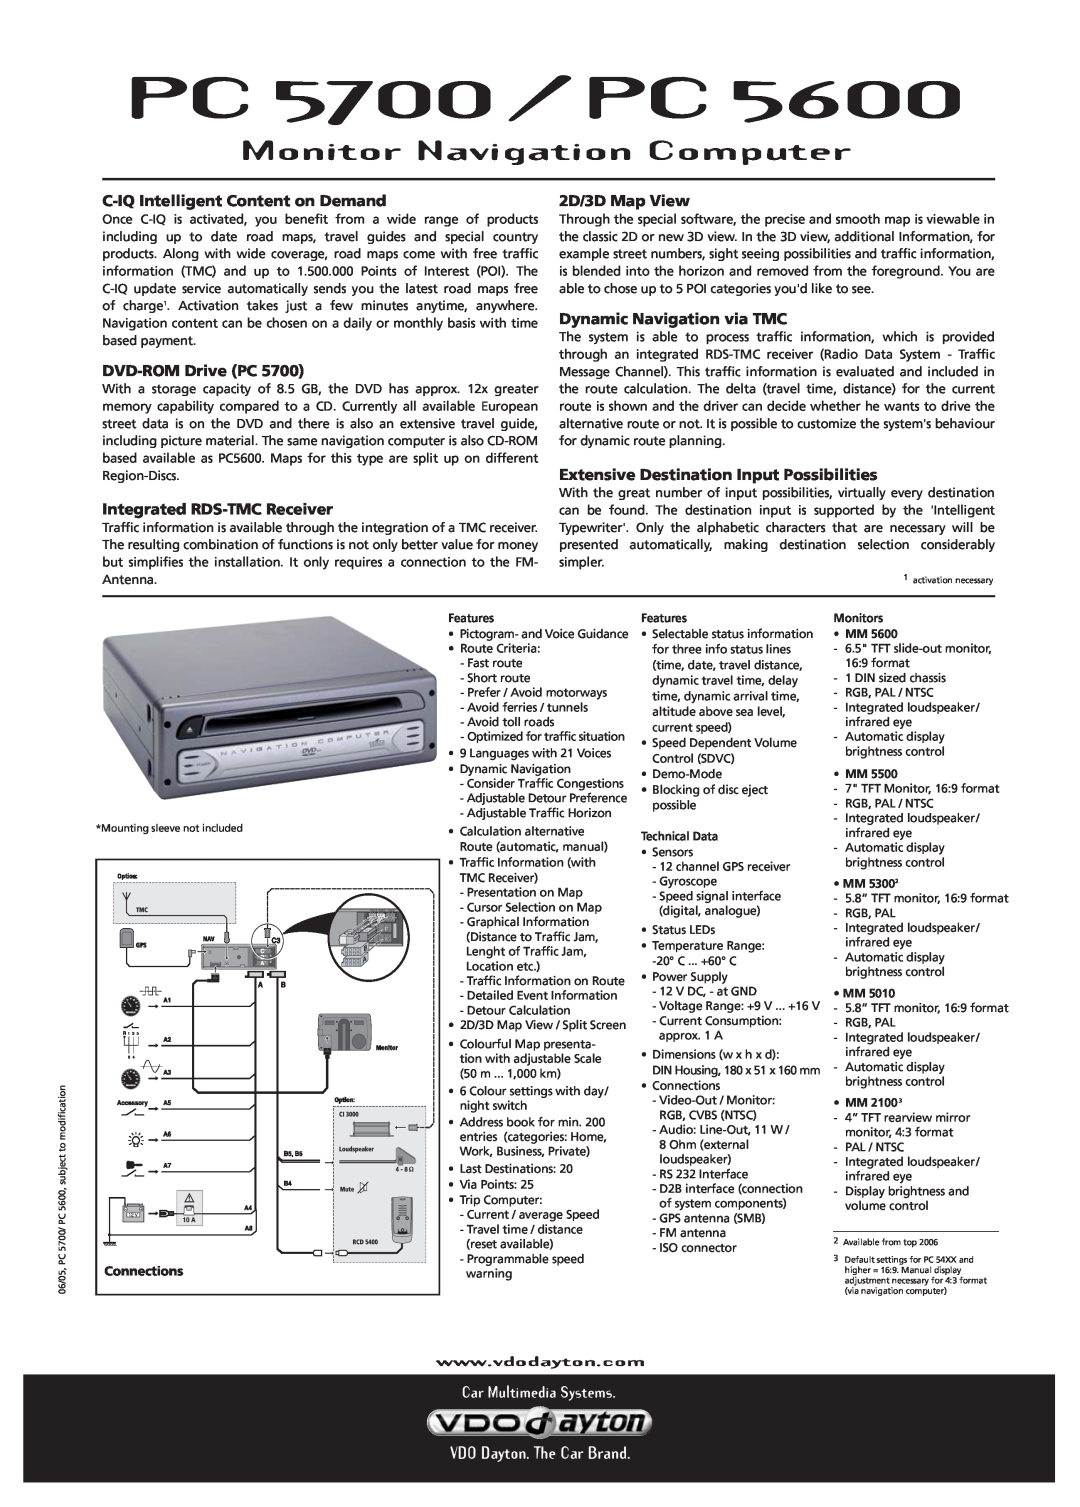 VDO Dayton PC 5700 / PC, Monitor Navigation Computer, C-IQ Intelligent Content on Demand, DVD-ROM Drive PC, Connections 